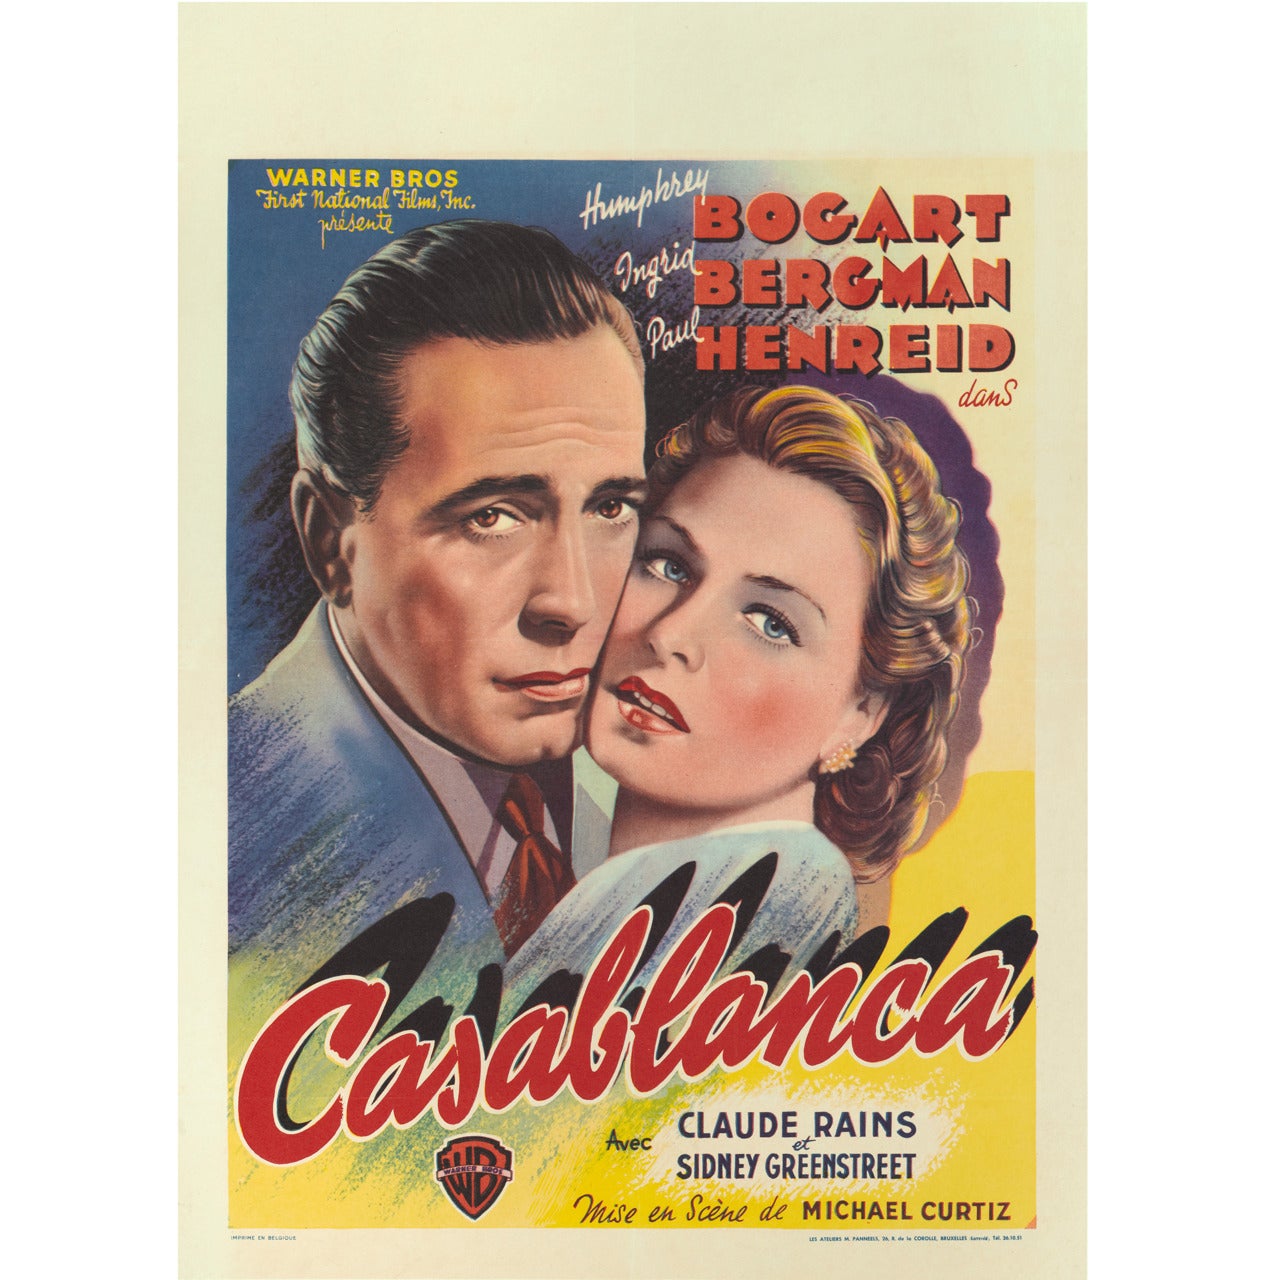 "Casablanca" Original Belgian Film Poster